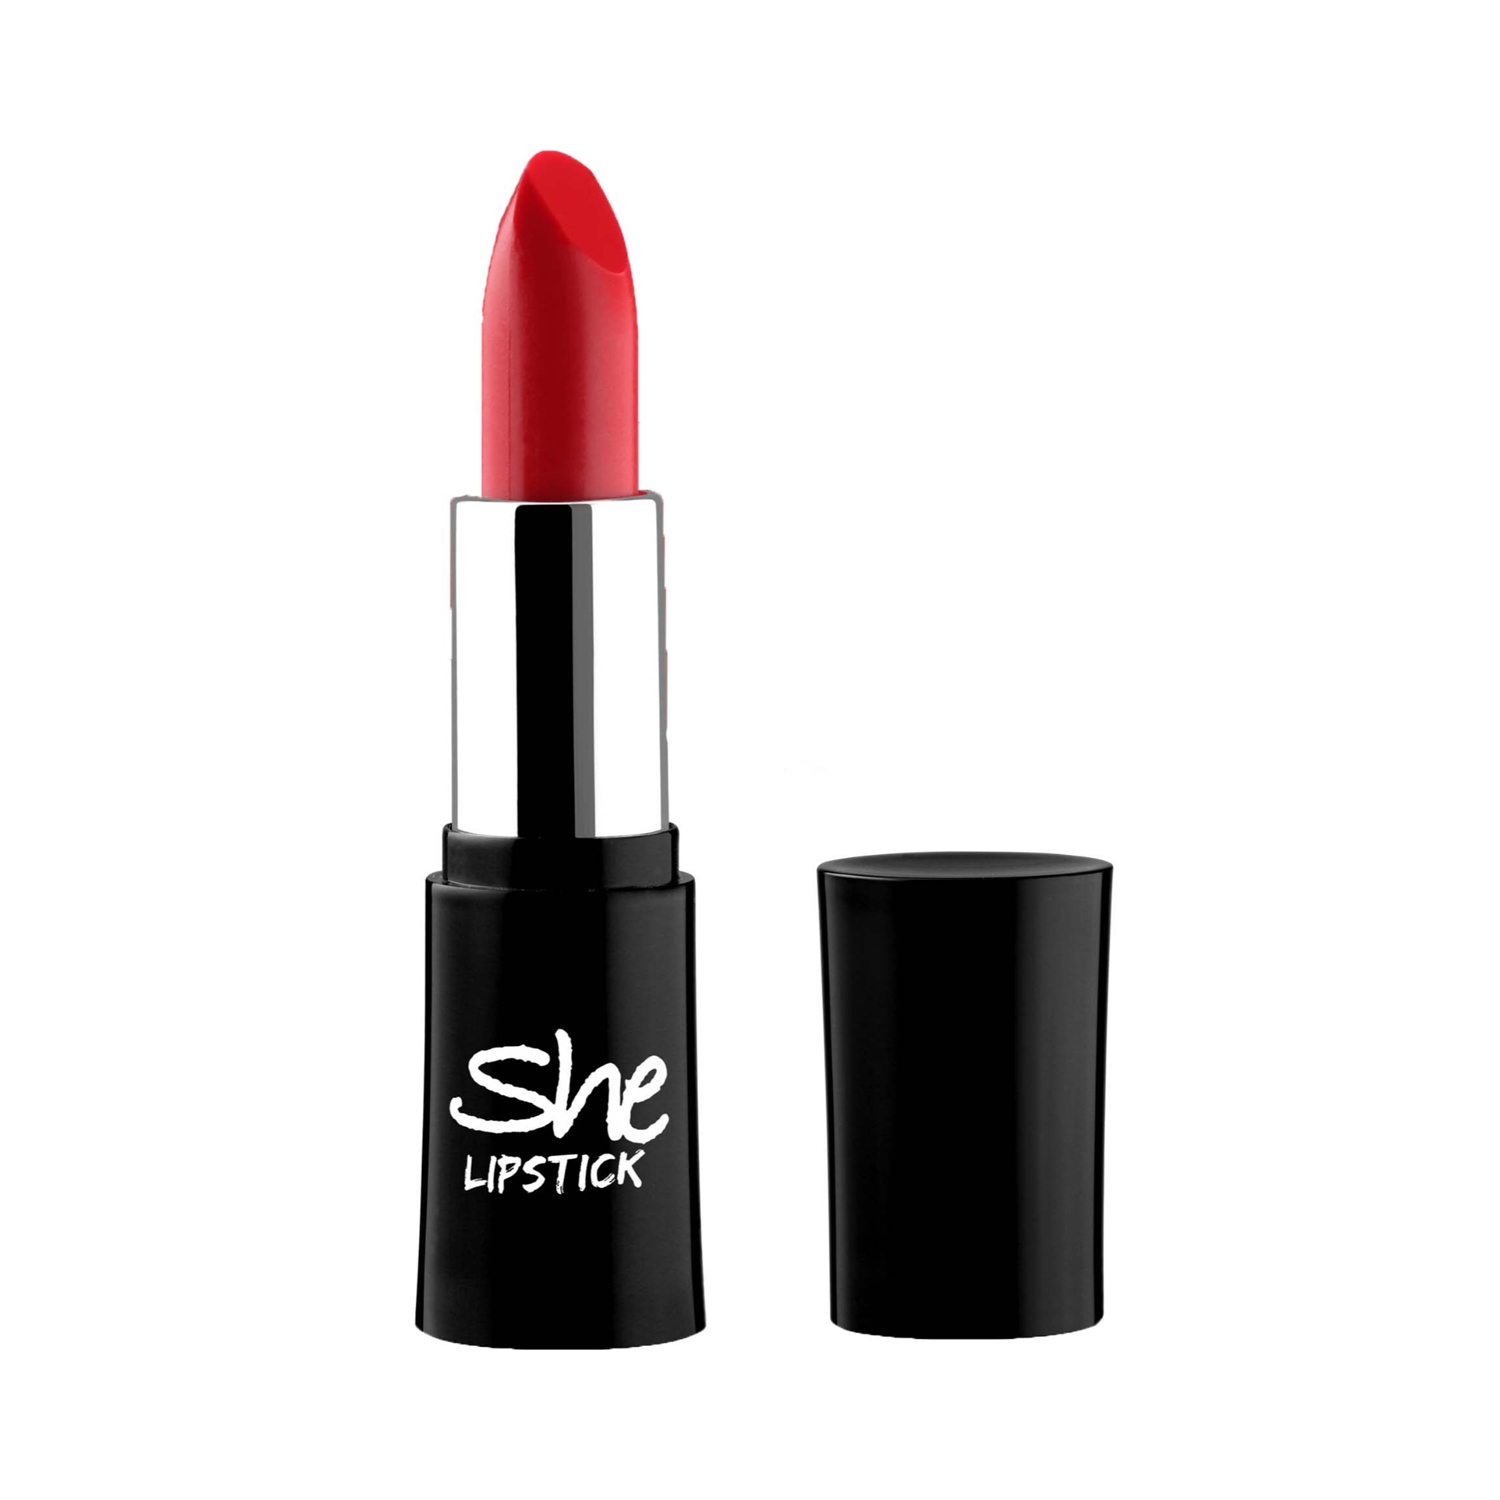 She Makeup Lipstick - 08 Fiery Red (4.5g)